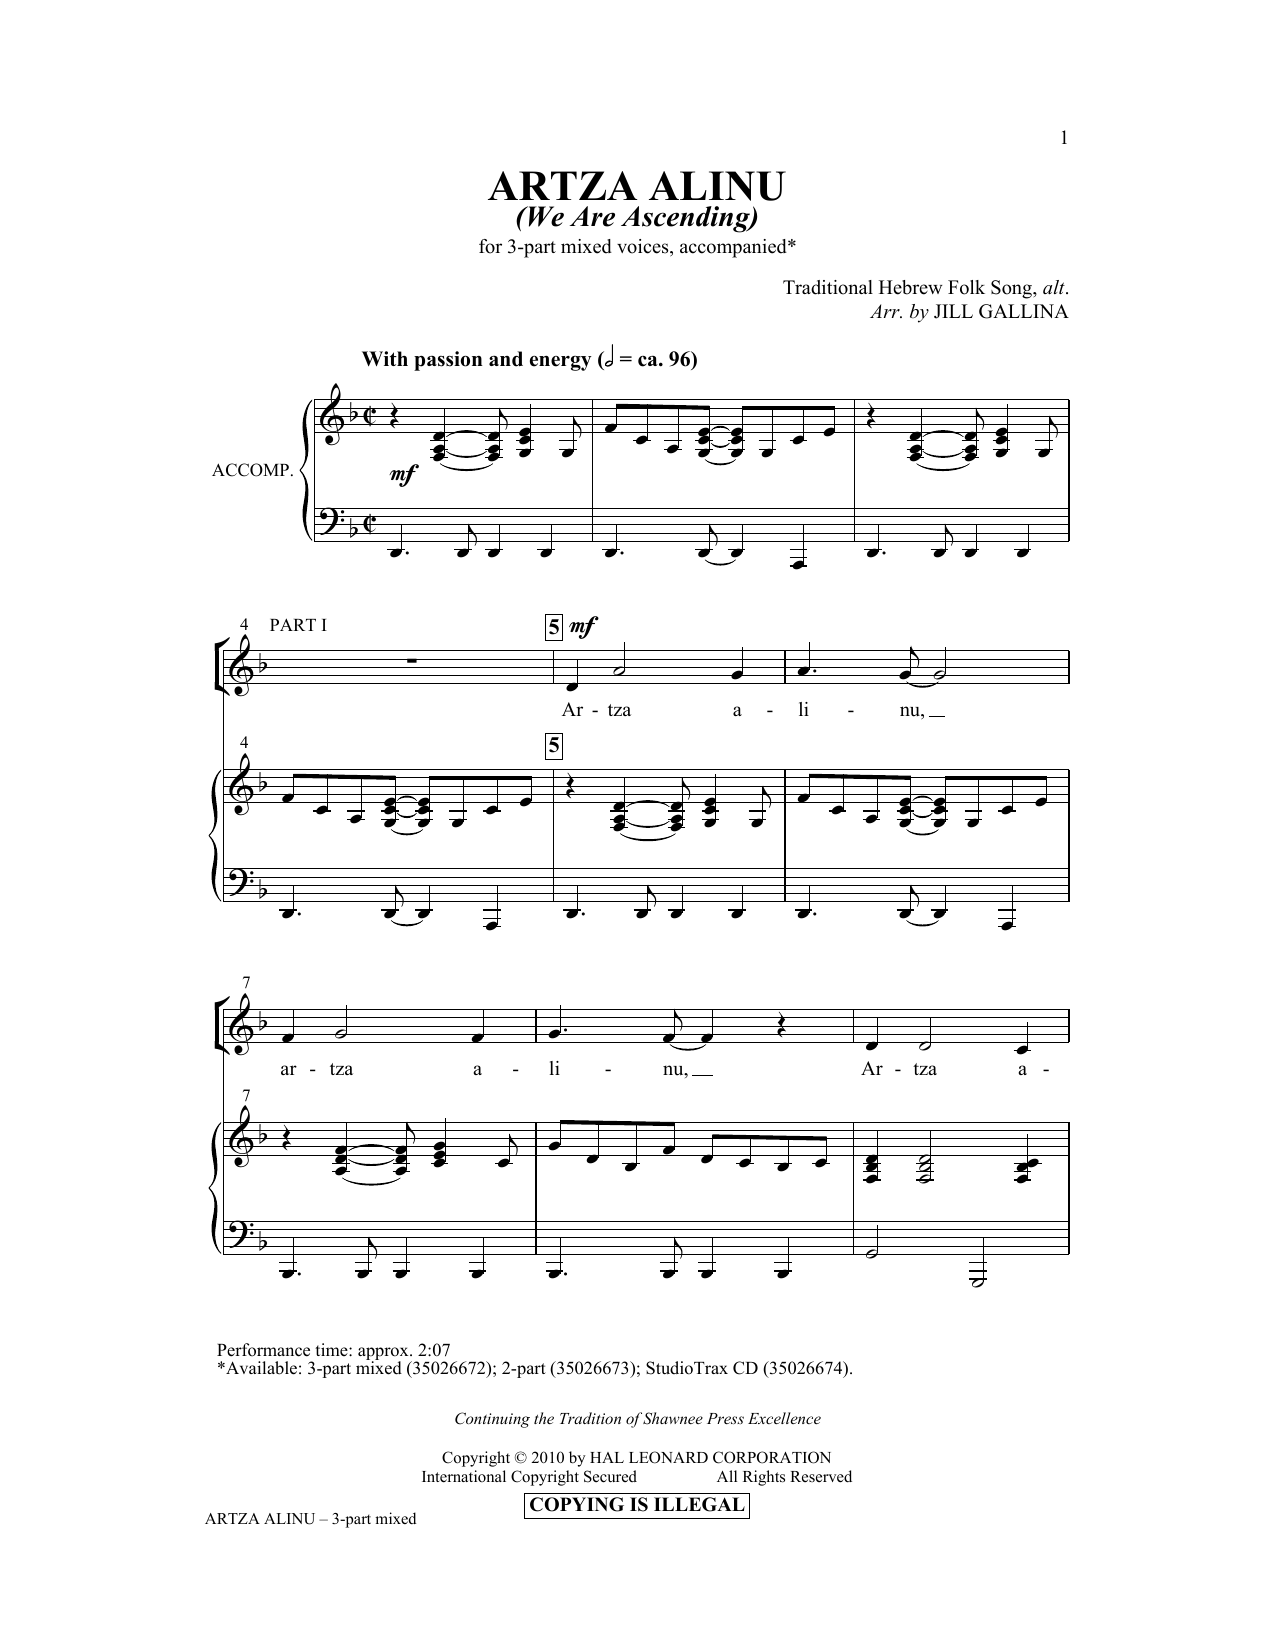 Jill Gallina Artza Alinu Sheet Music Notes & Chords for 3-Part Mixed - Download or Print PDF